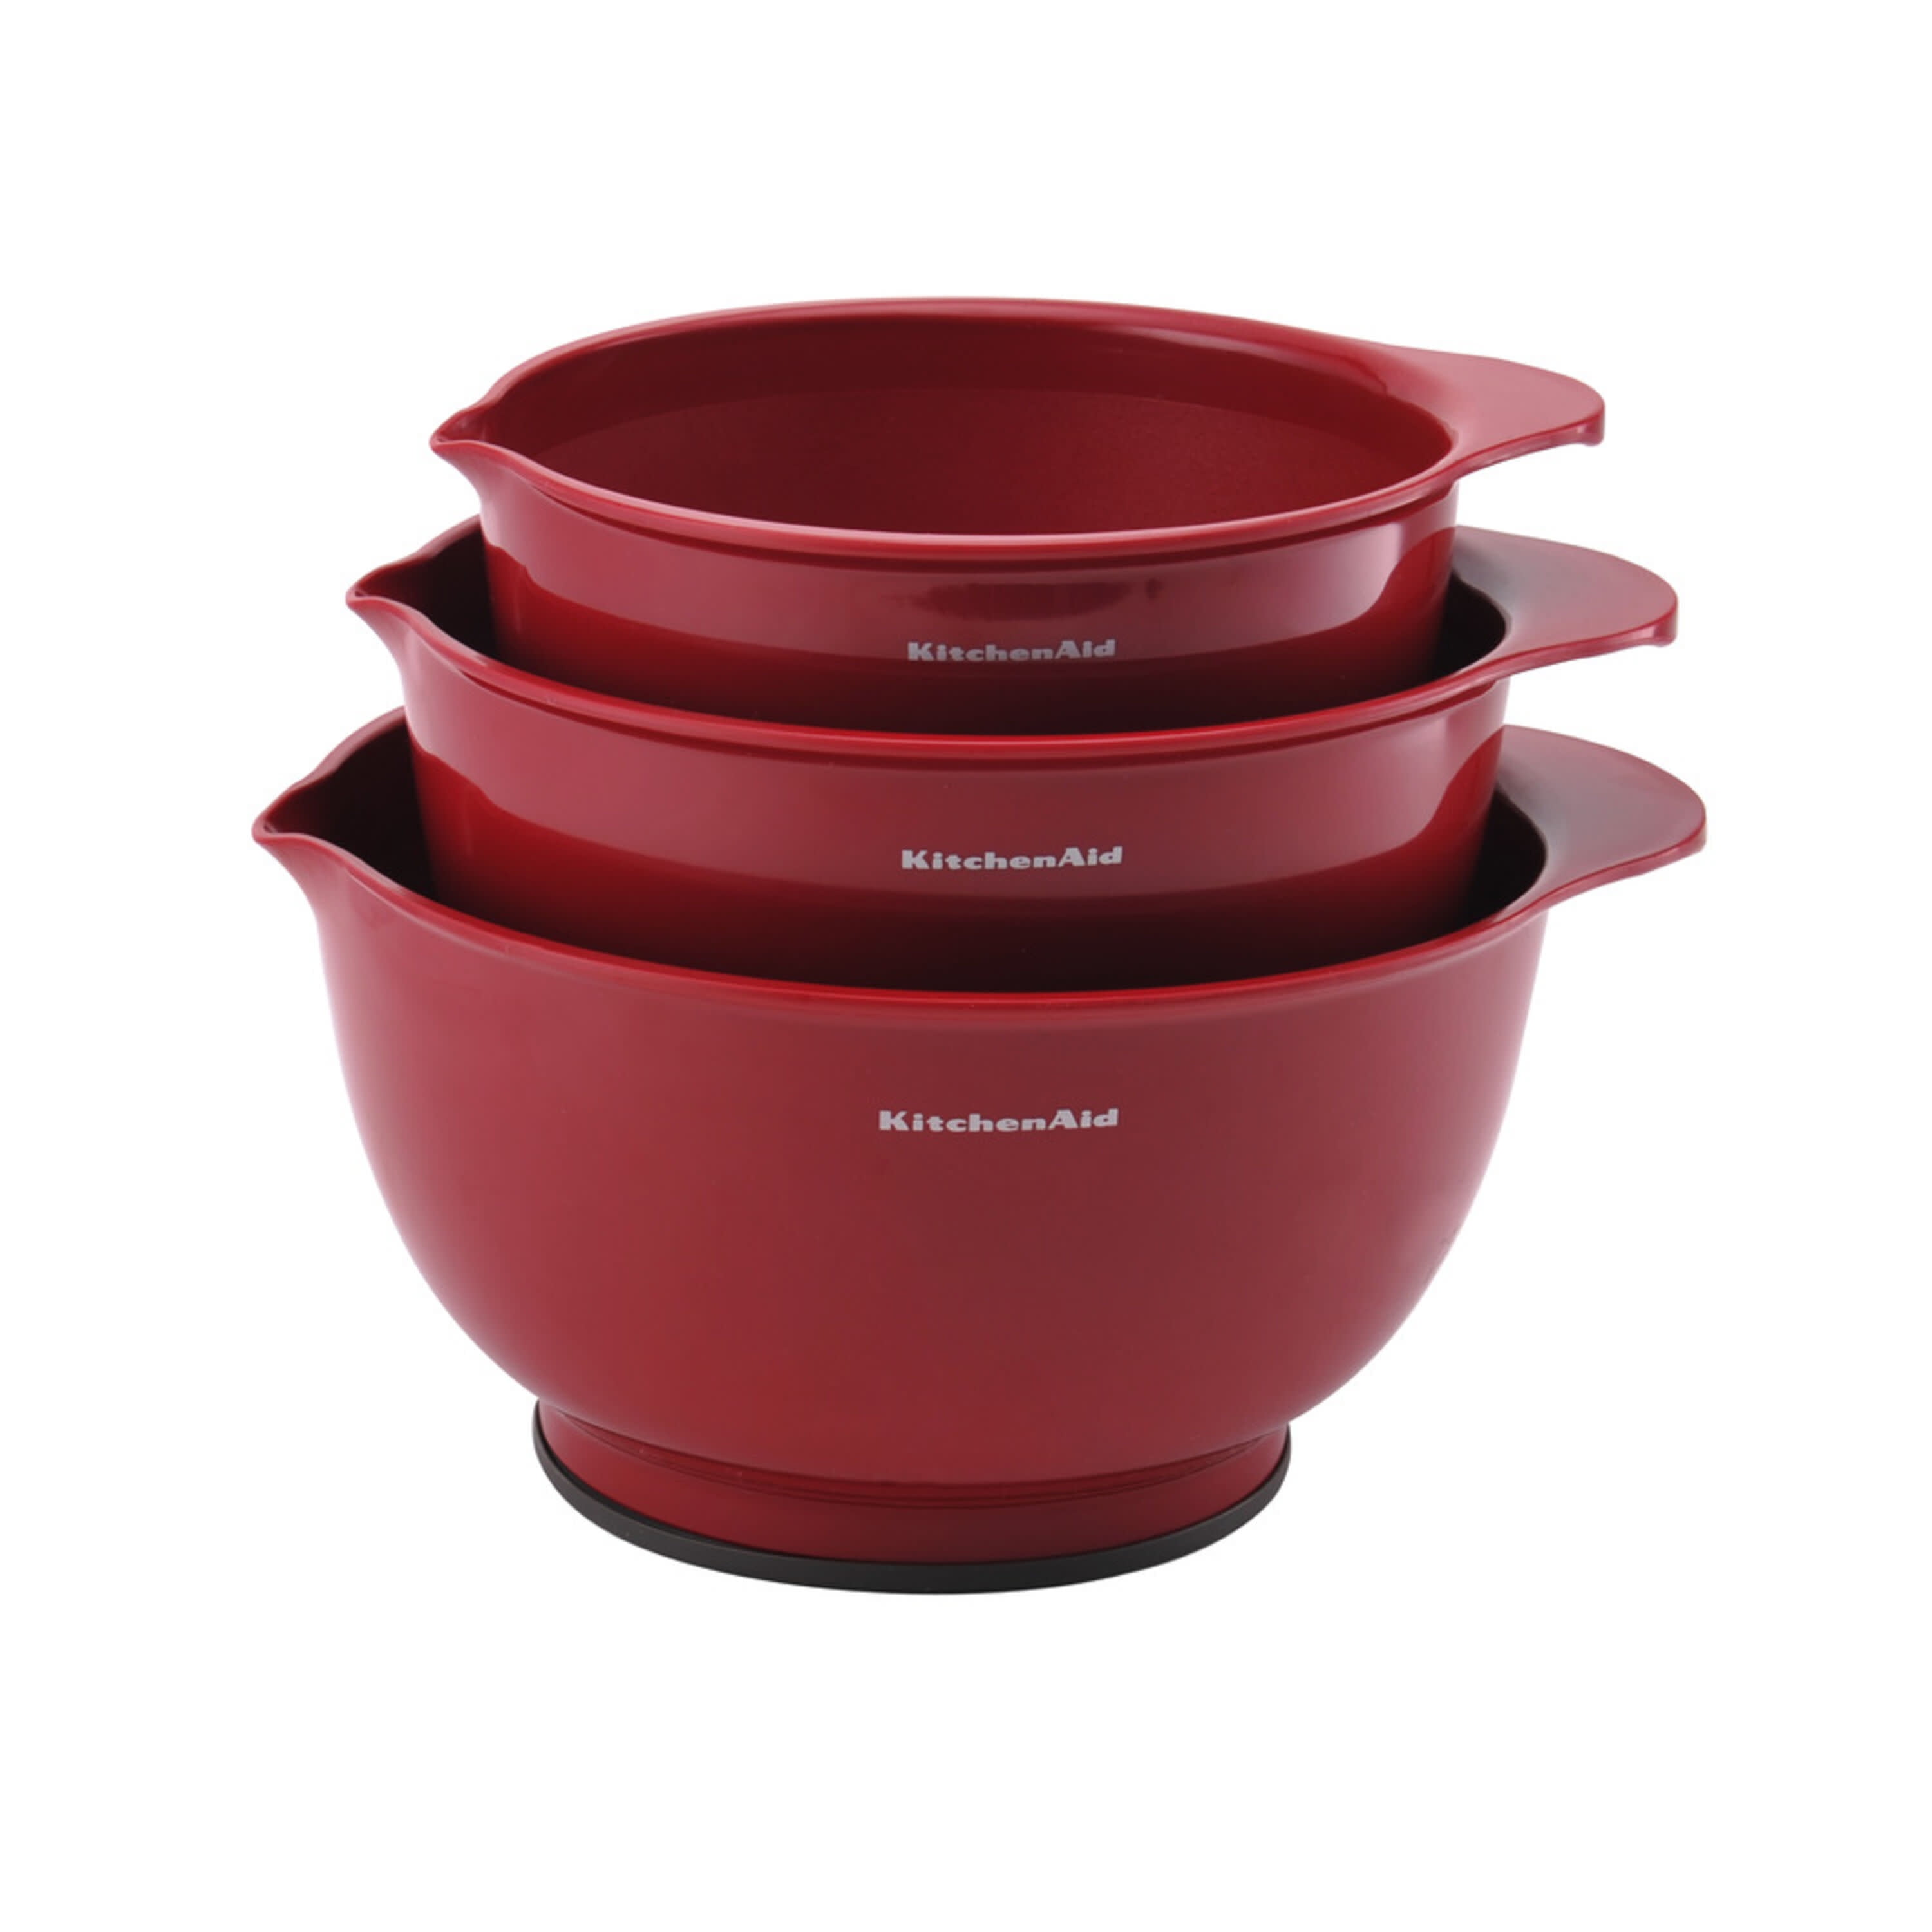  KitchenAid Classic Mixing Bowls, Set of 3, Pistachio, 3.5  quarts : Clothing, Shoes & Jewelry